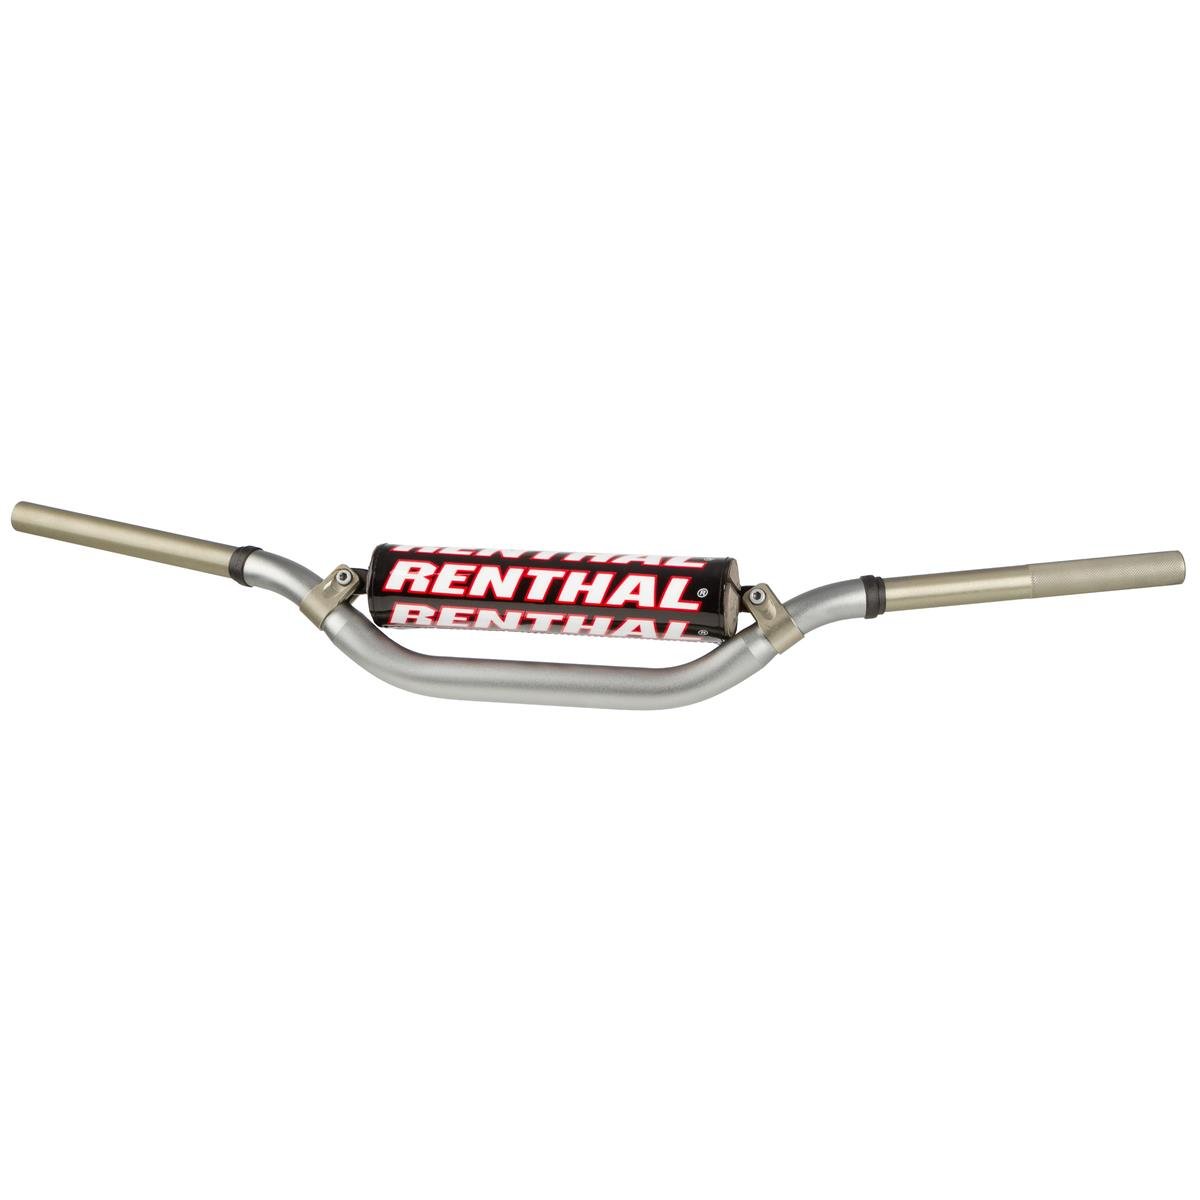 Renthal Lenker Twinwall 997, 28.6 mm, Tanium